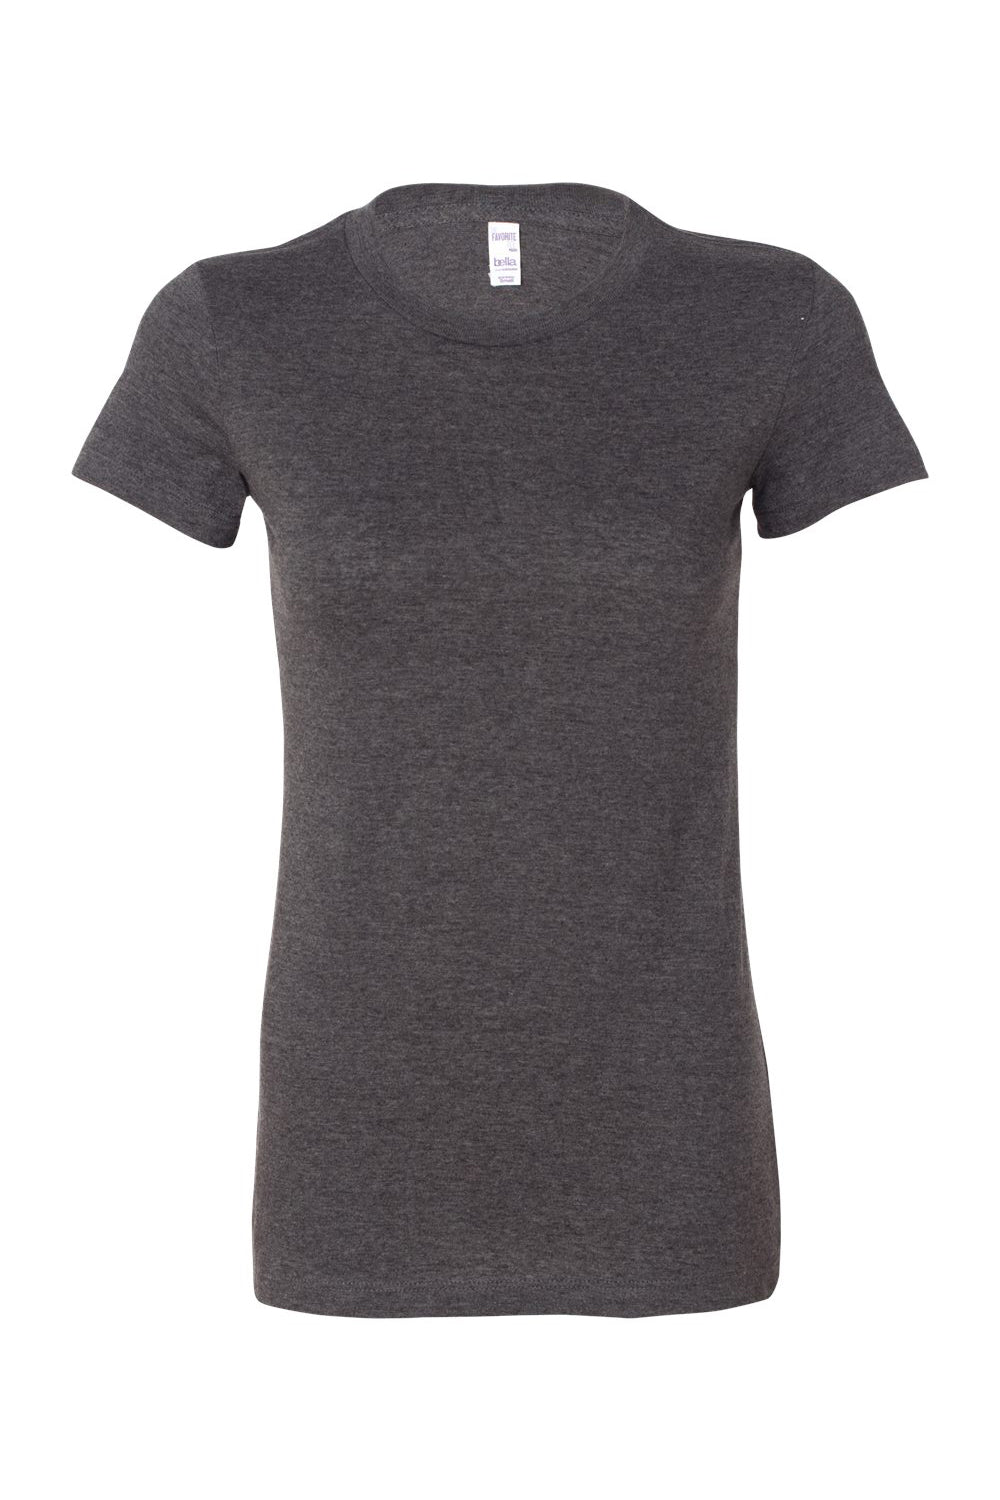 Bella + Canvas BC6004/6004 Womens The Favorite Short Sleeve Crewneck T-Shirt Heather Dark Grey Flat Front